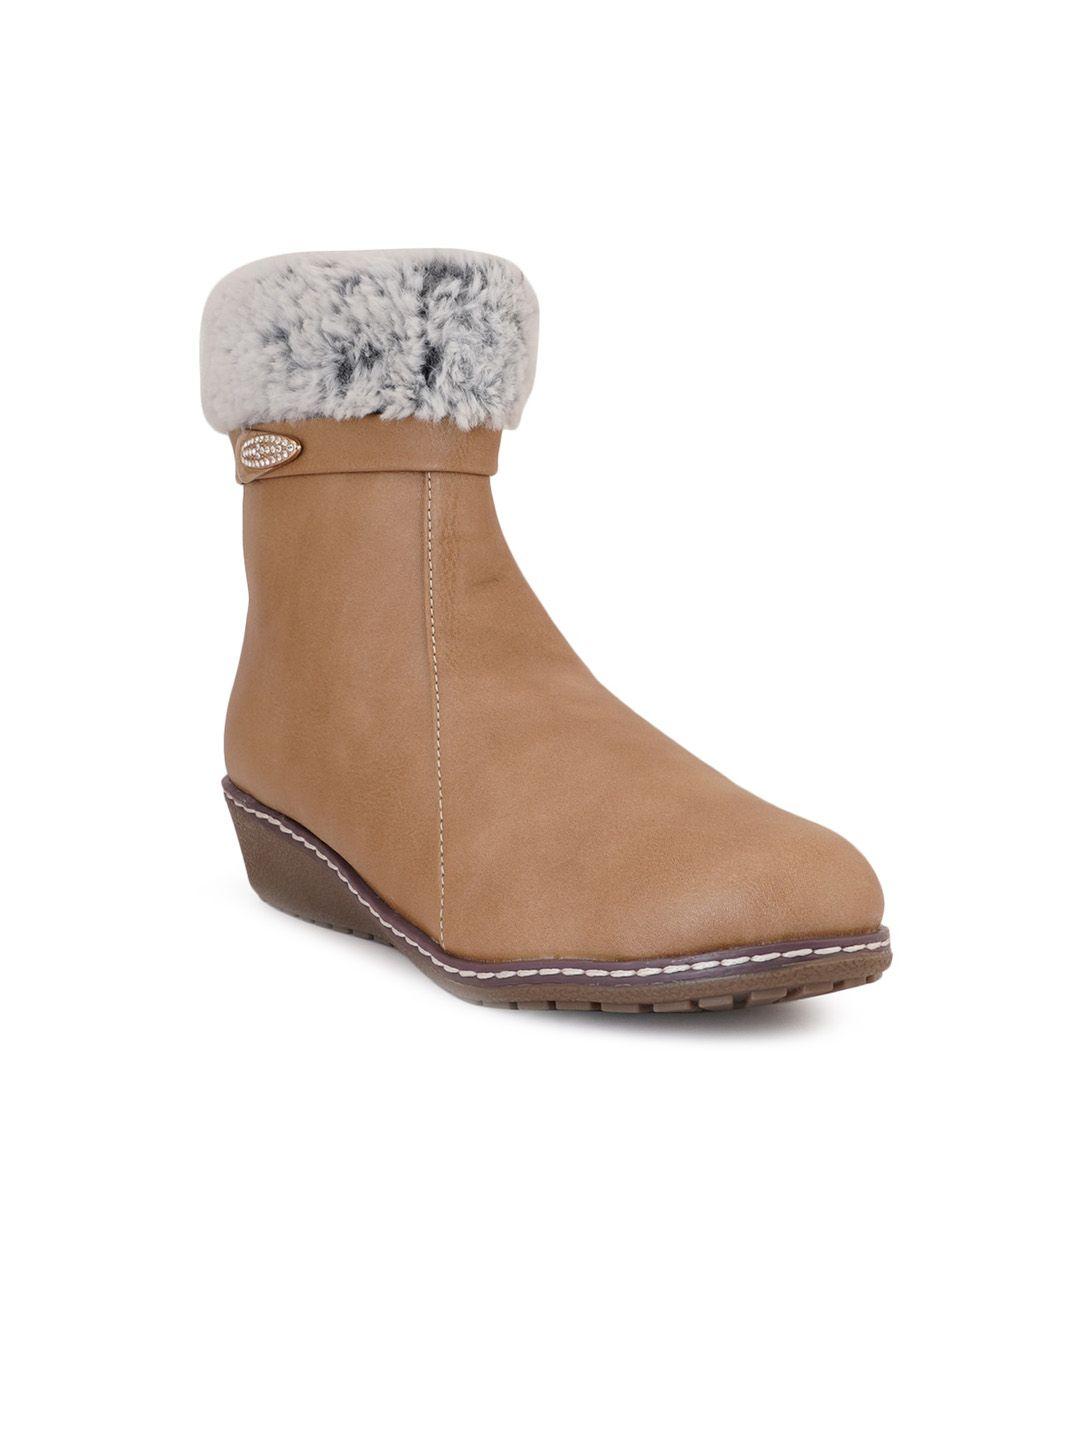 everly women brown textured fur winter boots